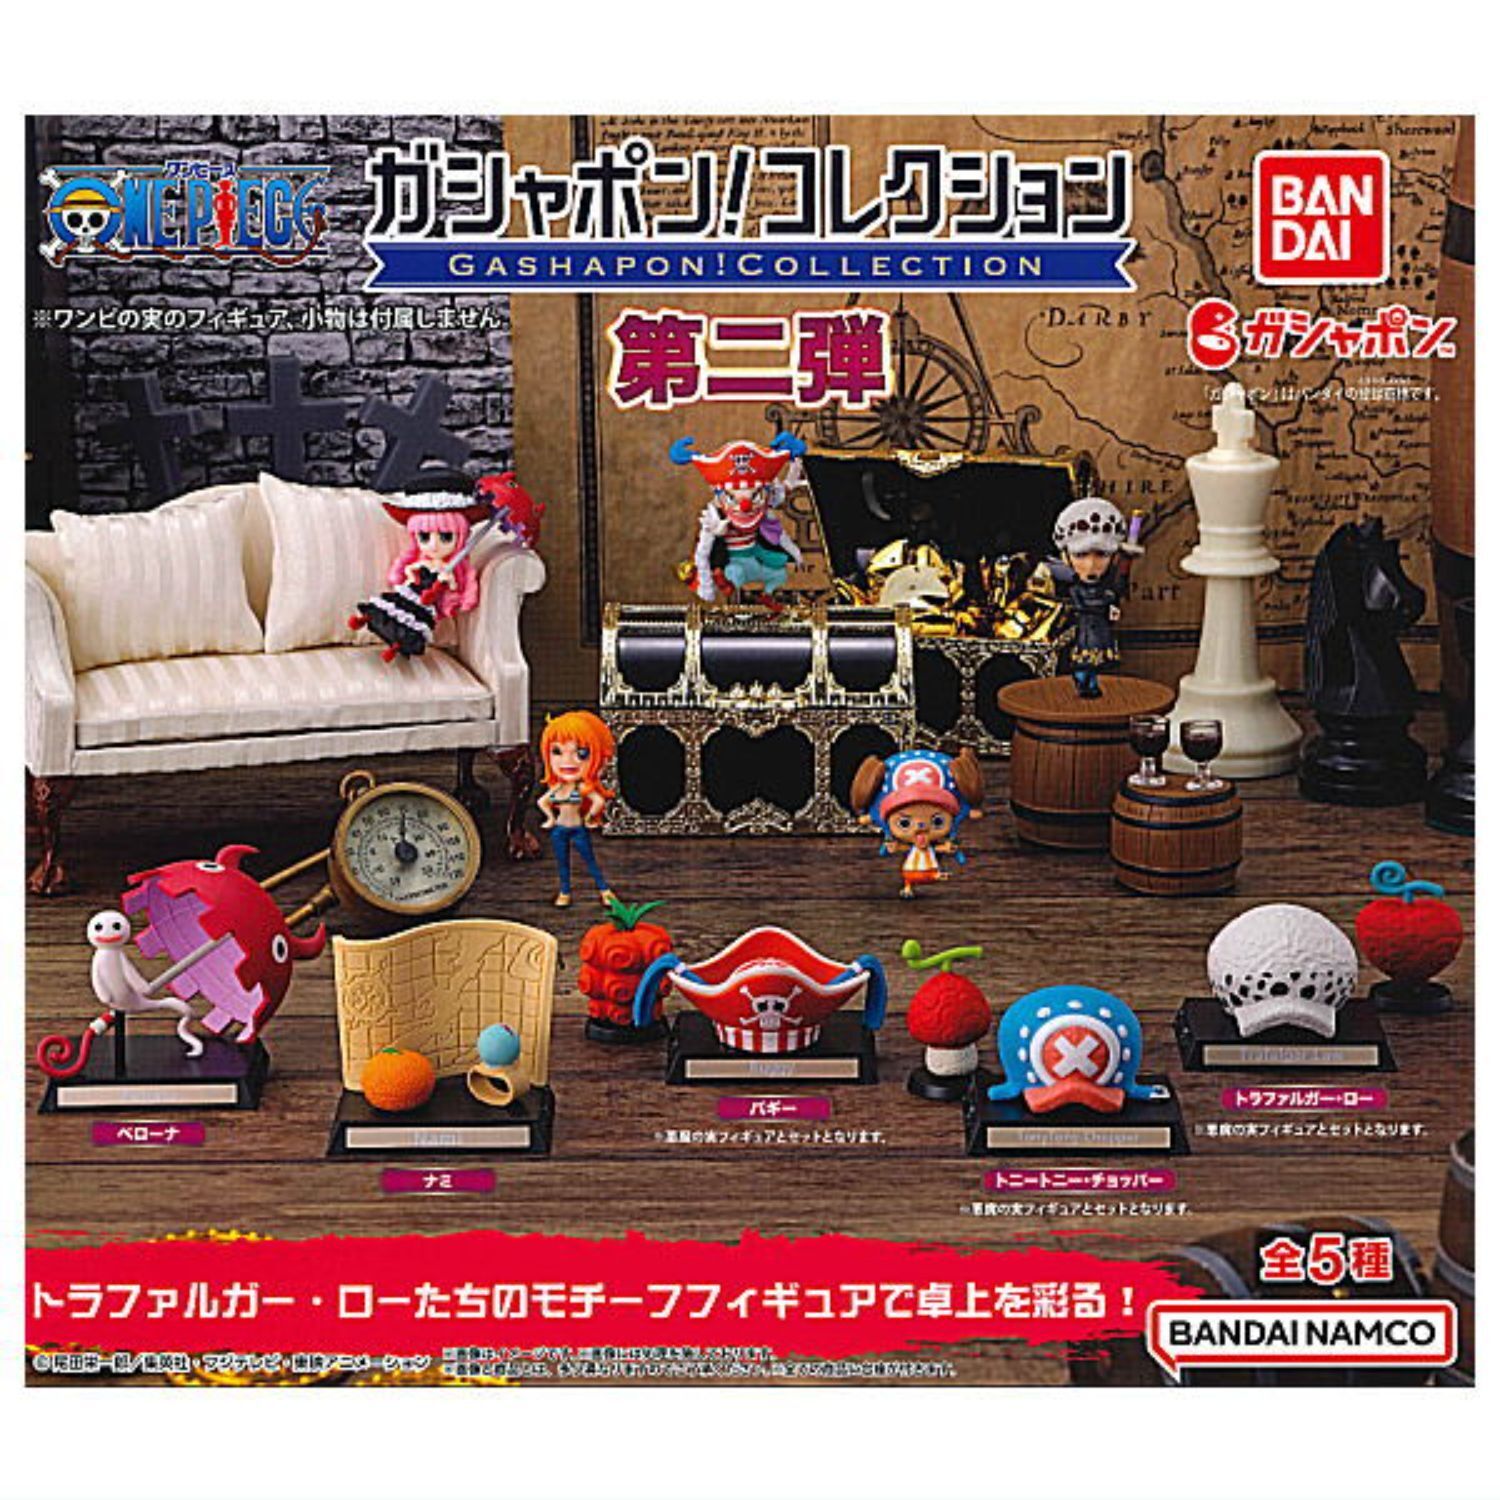 ONE PIECE Gashapon Collection Mascot Capsule Toy BANDAI 5 PCS/SET 